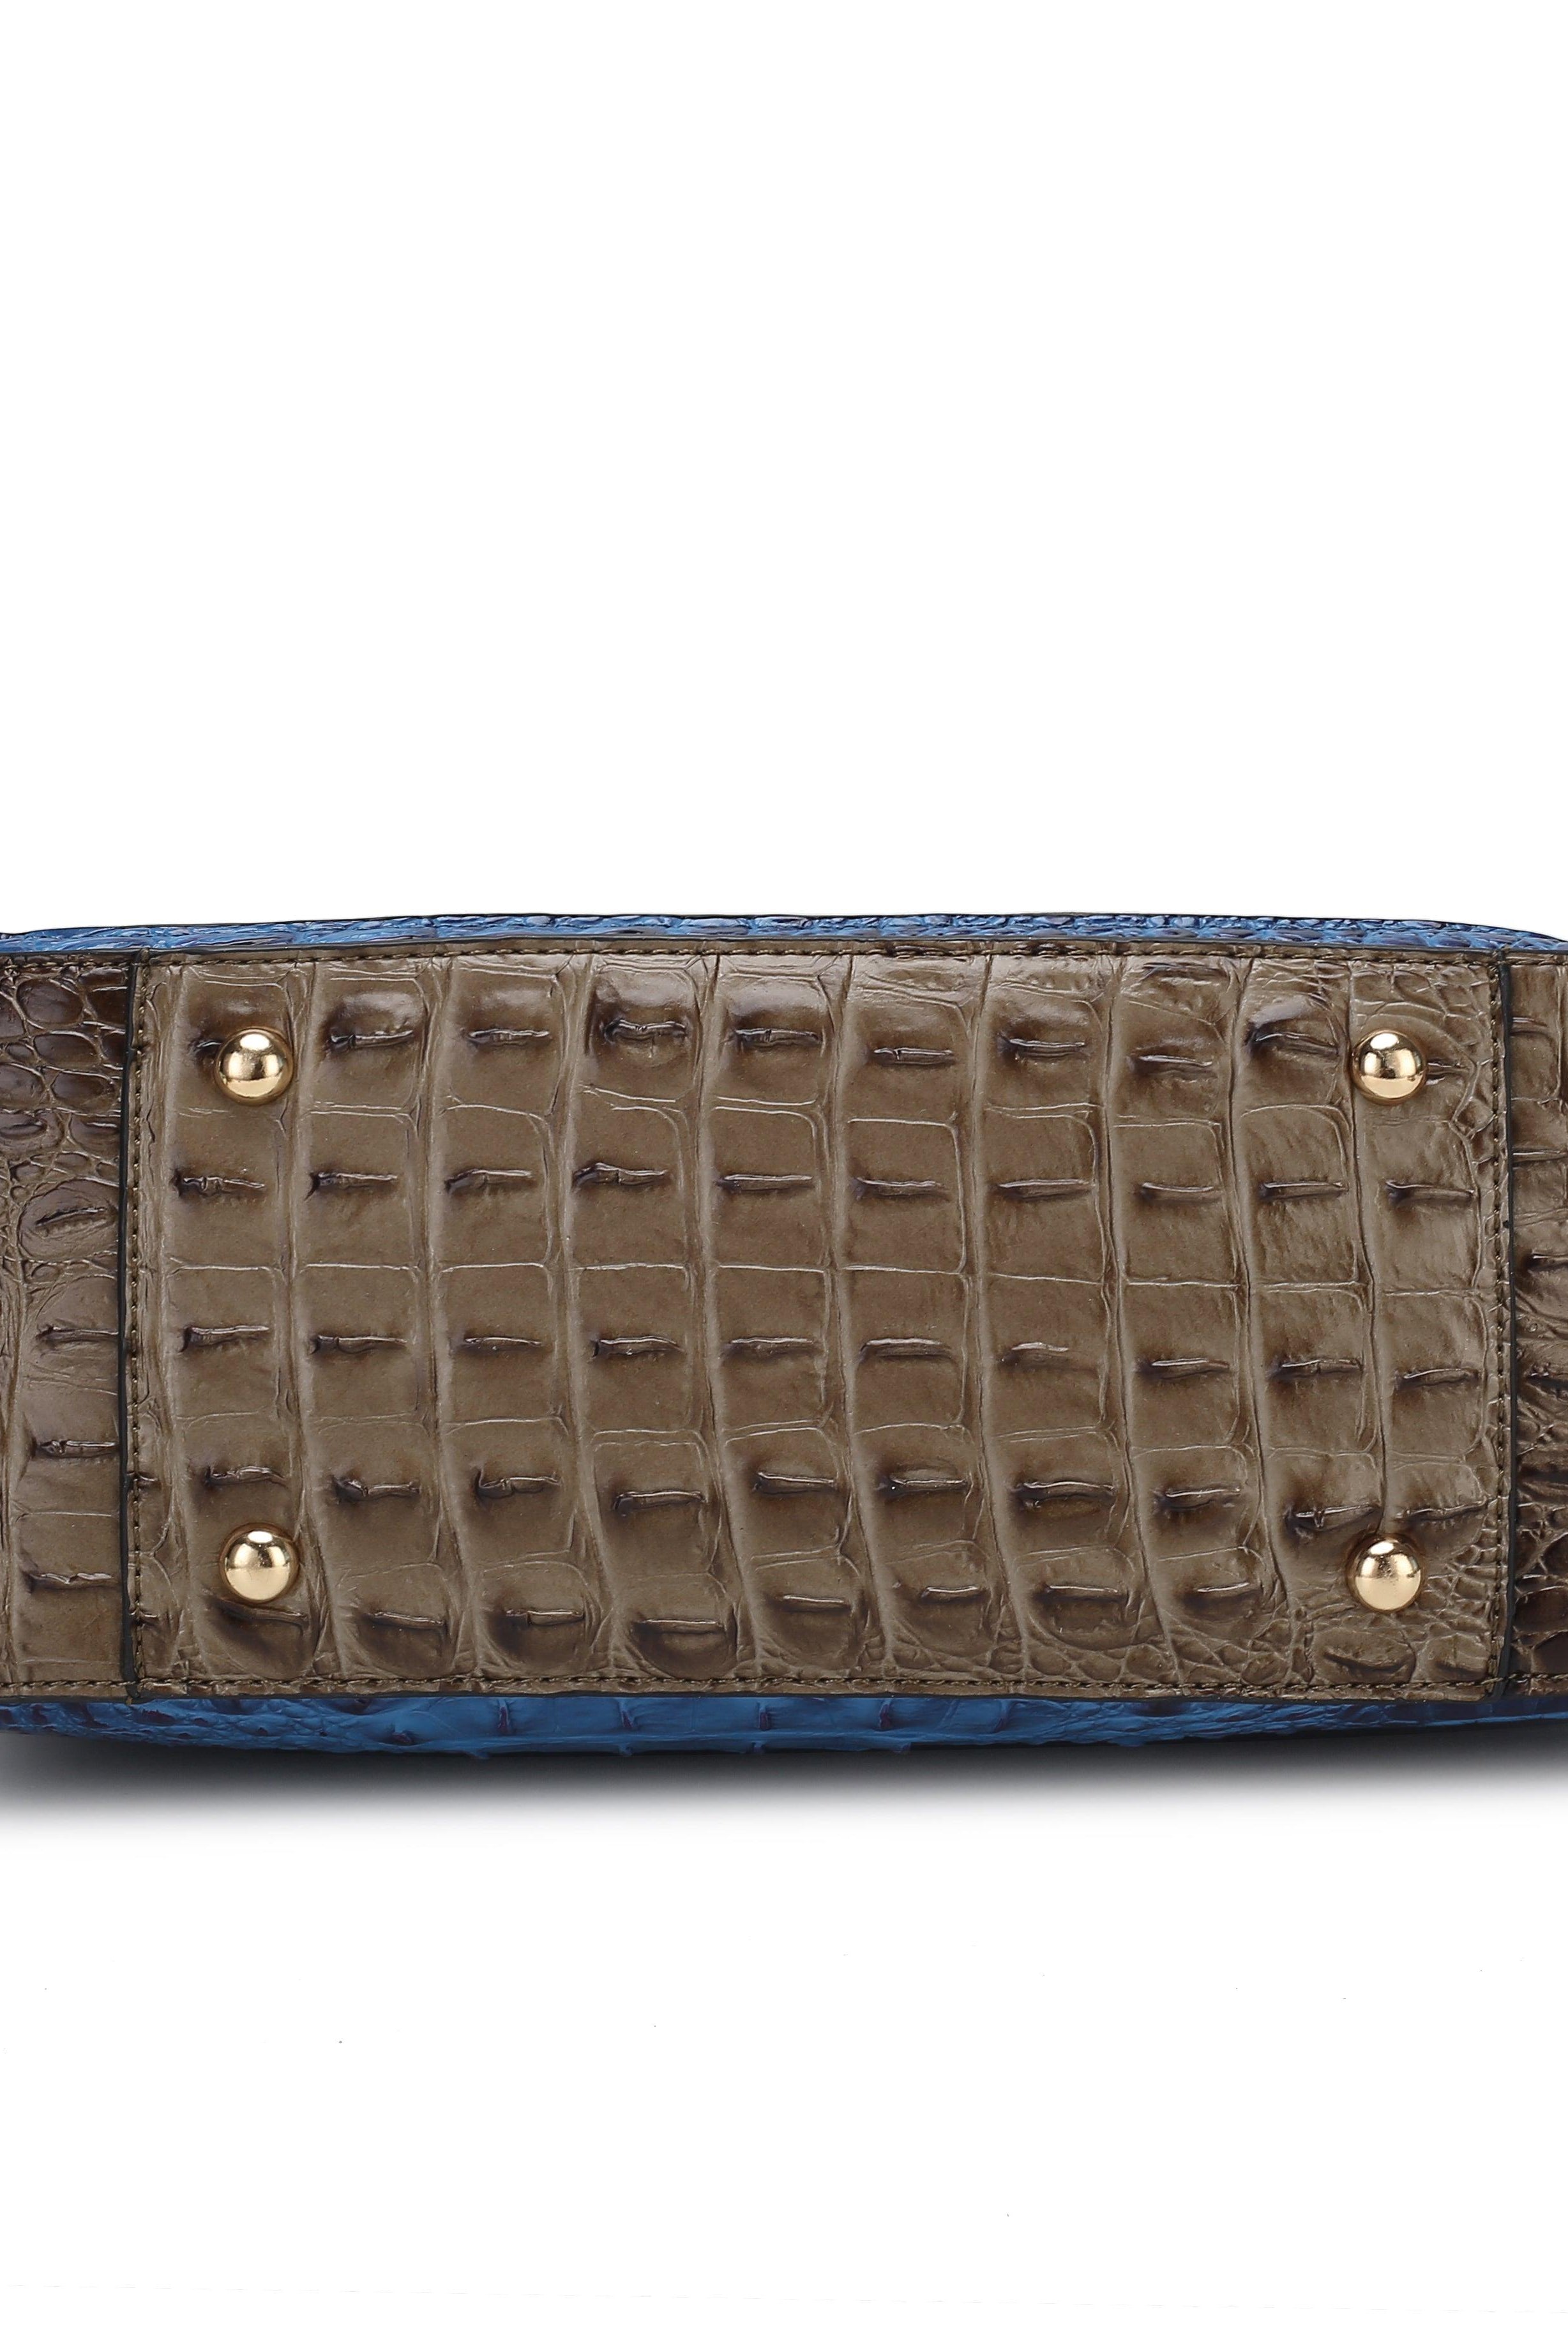 Wallets, Handbags & Accessories Bonnie Faux Crocodile Embossed Vegan Leather Women Satchel...